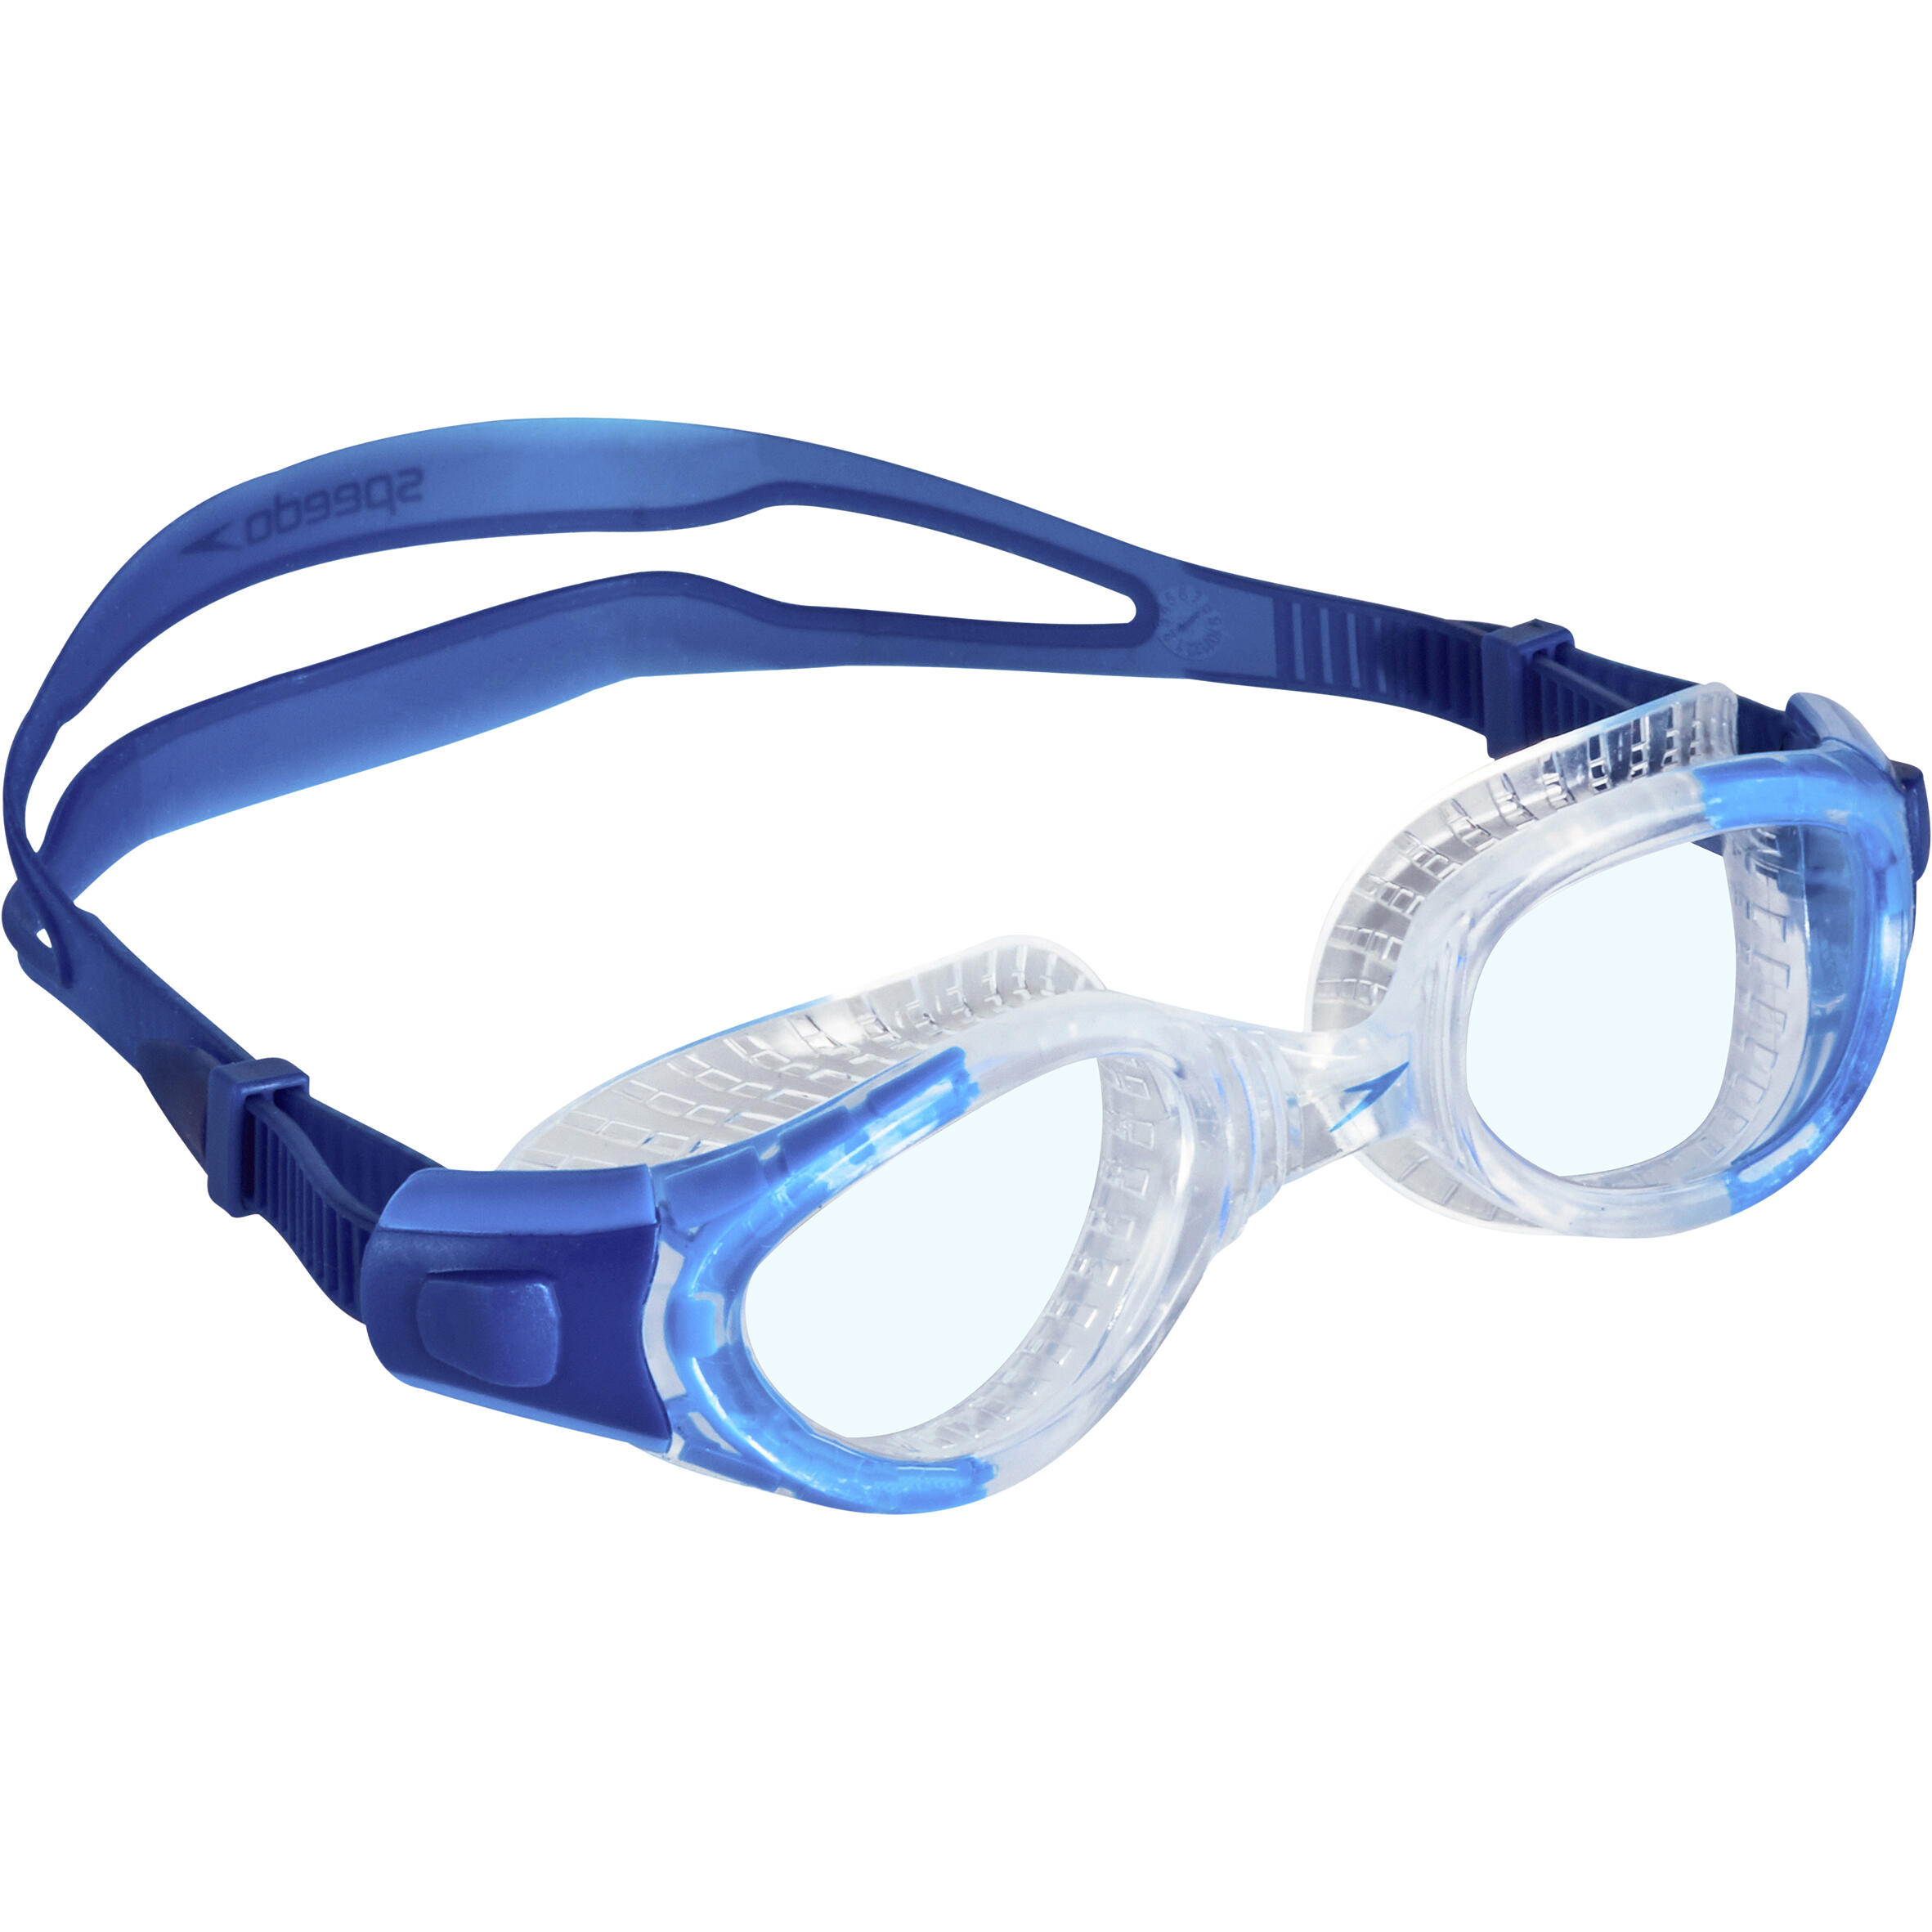 Ochelari Înot Futura Biofuse Flexiseal Lentile Transparente Albastru SPEEDO decathlon.ro